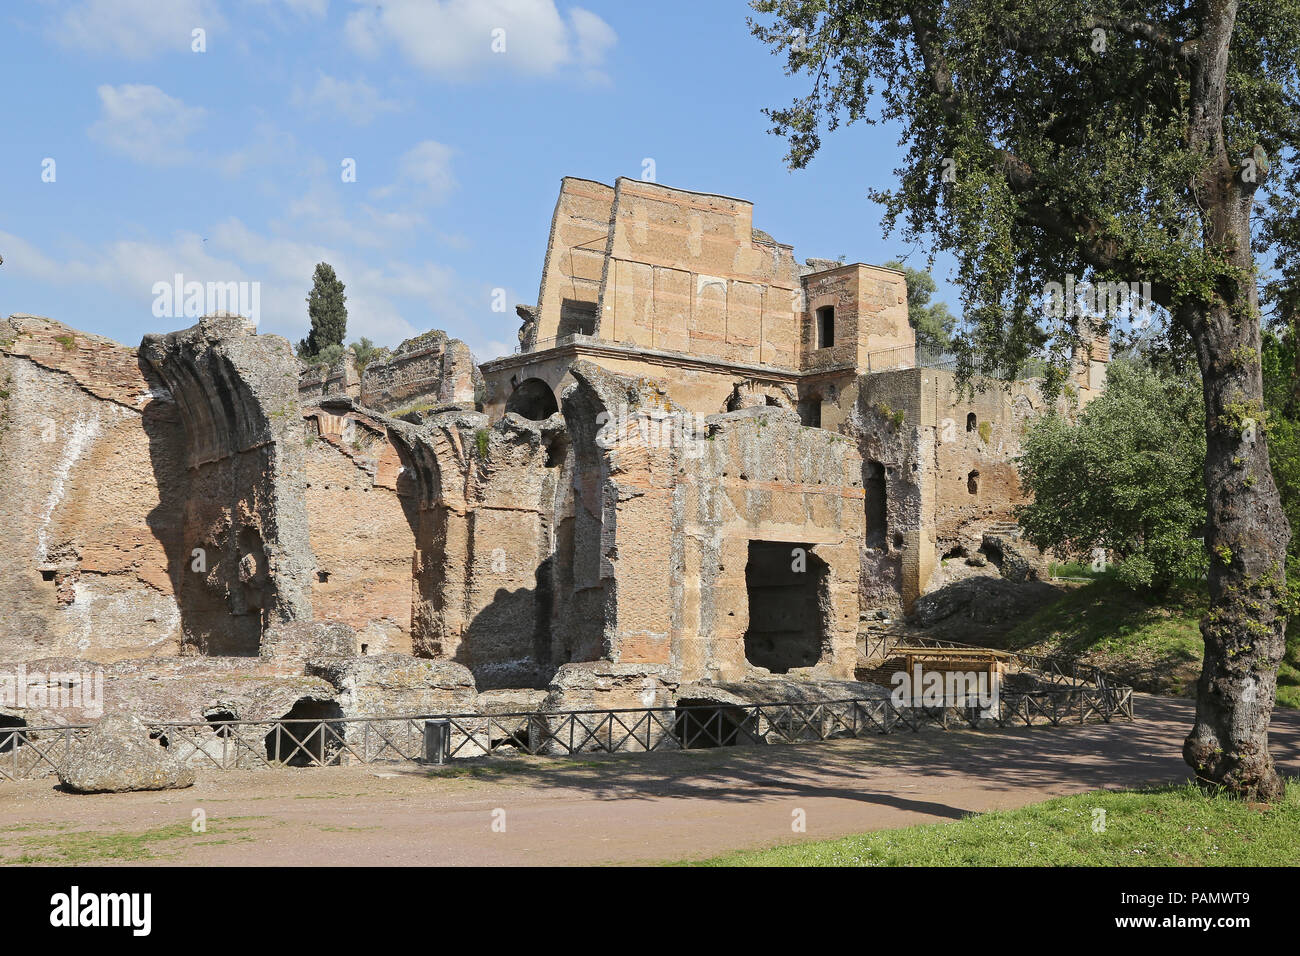 Tivoli, Italien - 21 April, 2014: antike Ruinen des Hadrian (Villa Adriana in Italienisch) ist eine große römische archäologische Komplex am Tivoli, Italien i Stockfoto